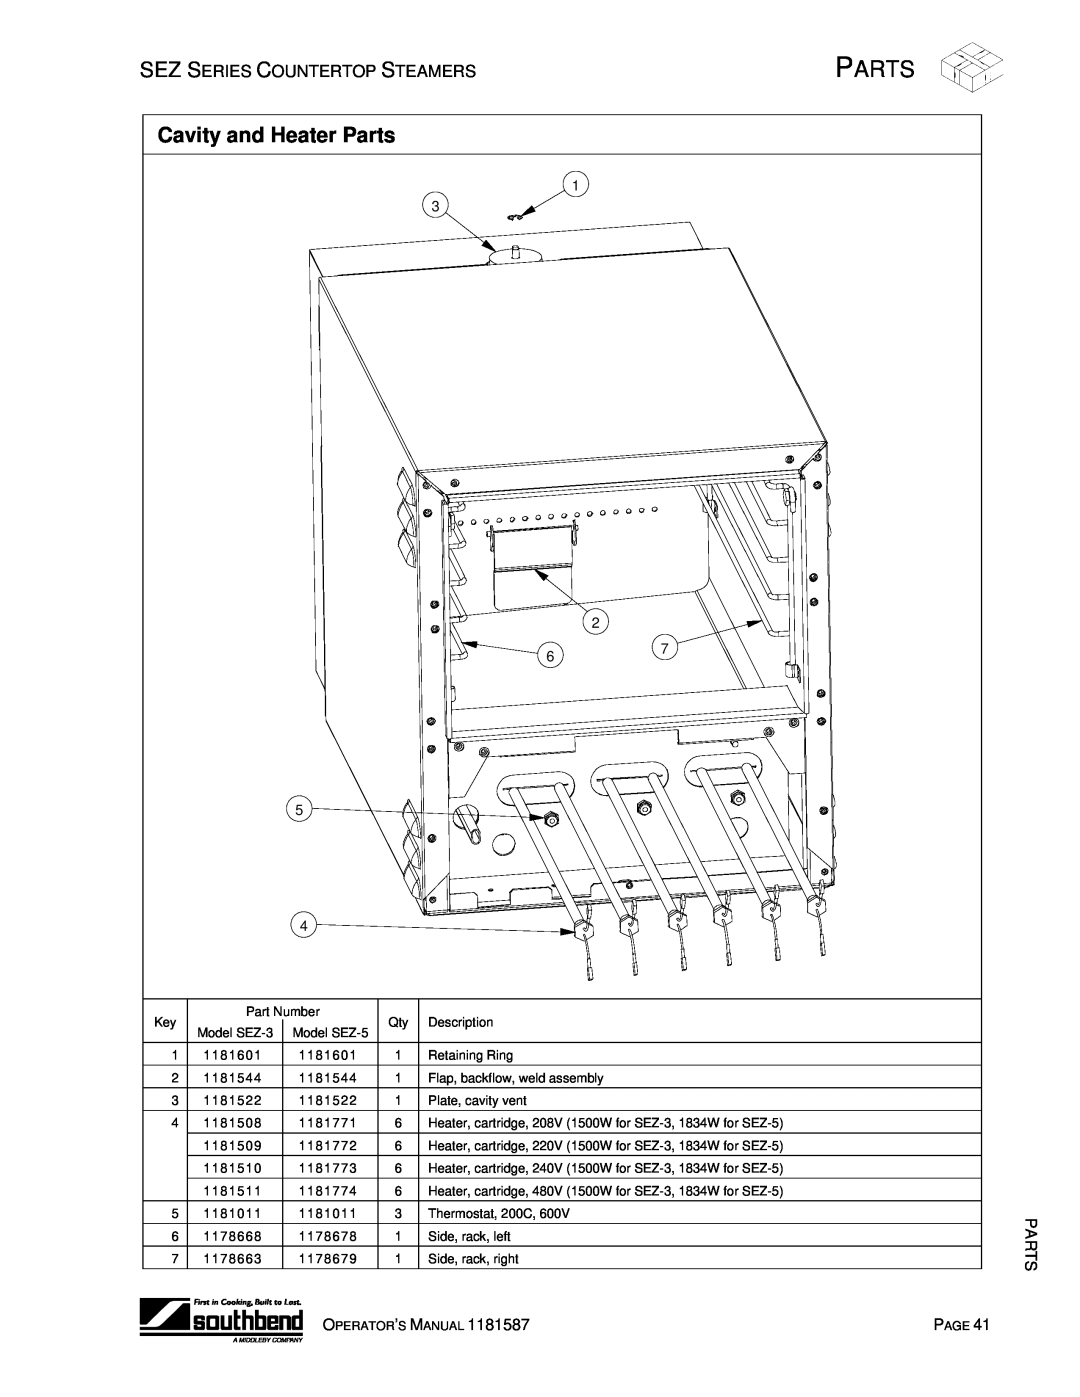 Southbend manual Cavity and Heater Parts, Model SEZ-3, Model SEZ-5, Flap, backflow, weld assembly 